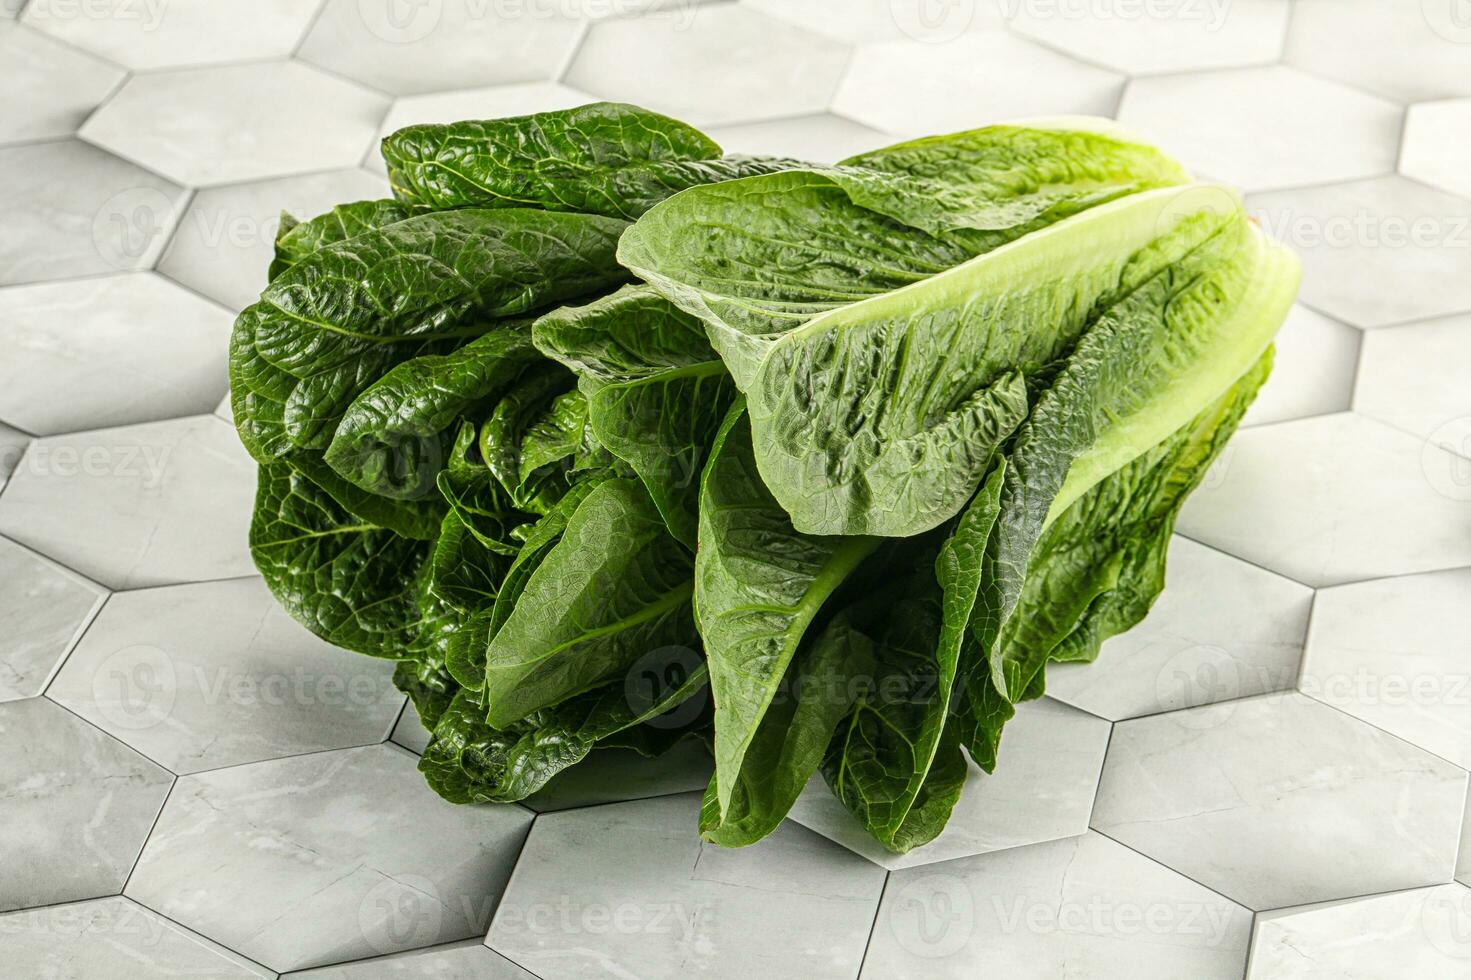 verde fresco suculento romano salada foto